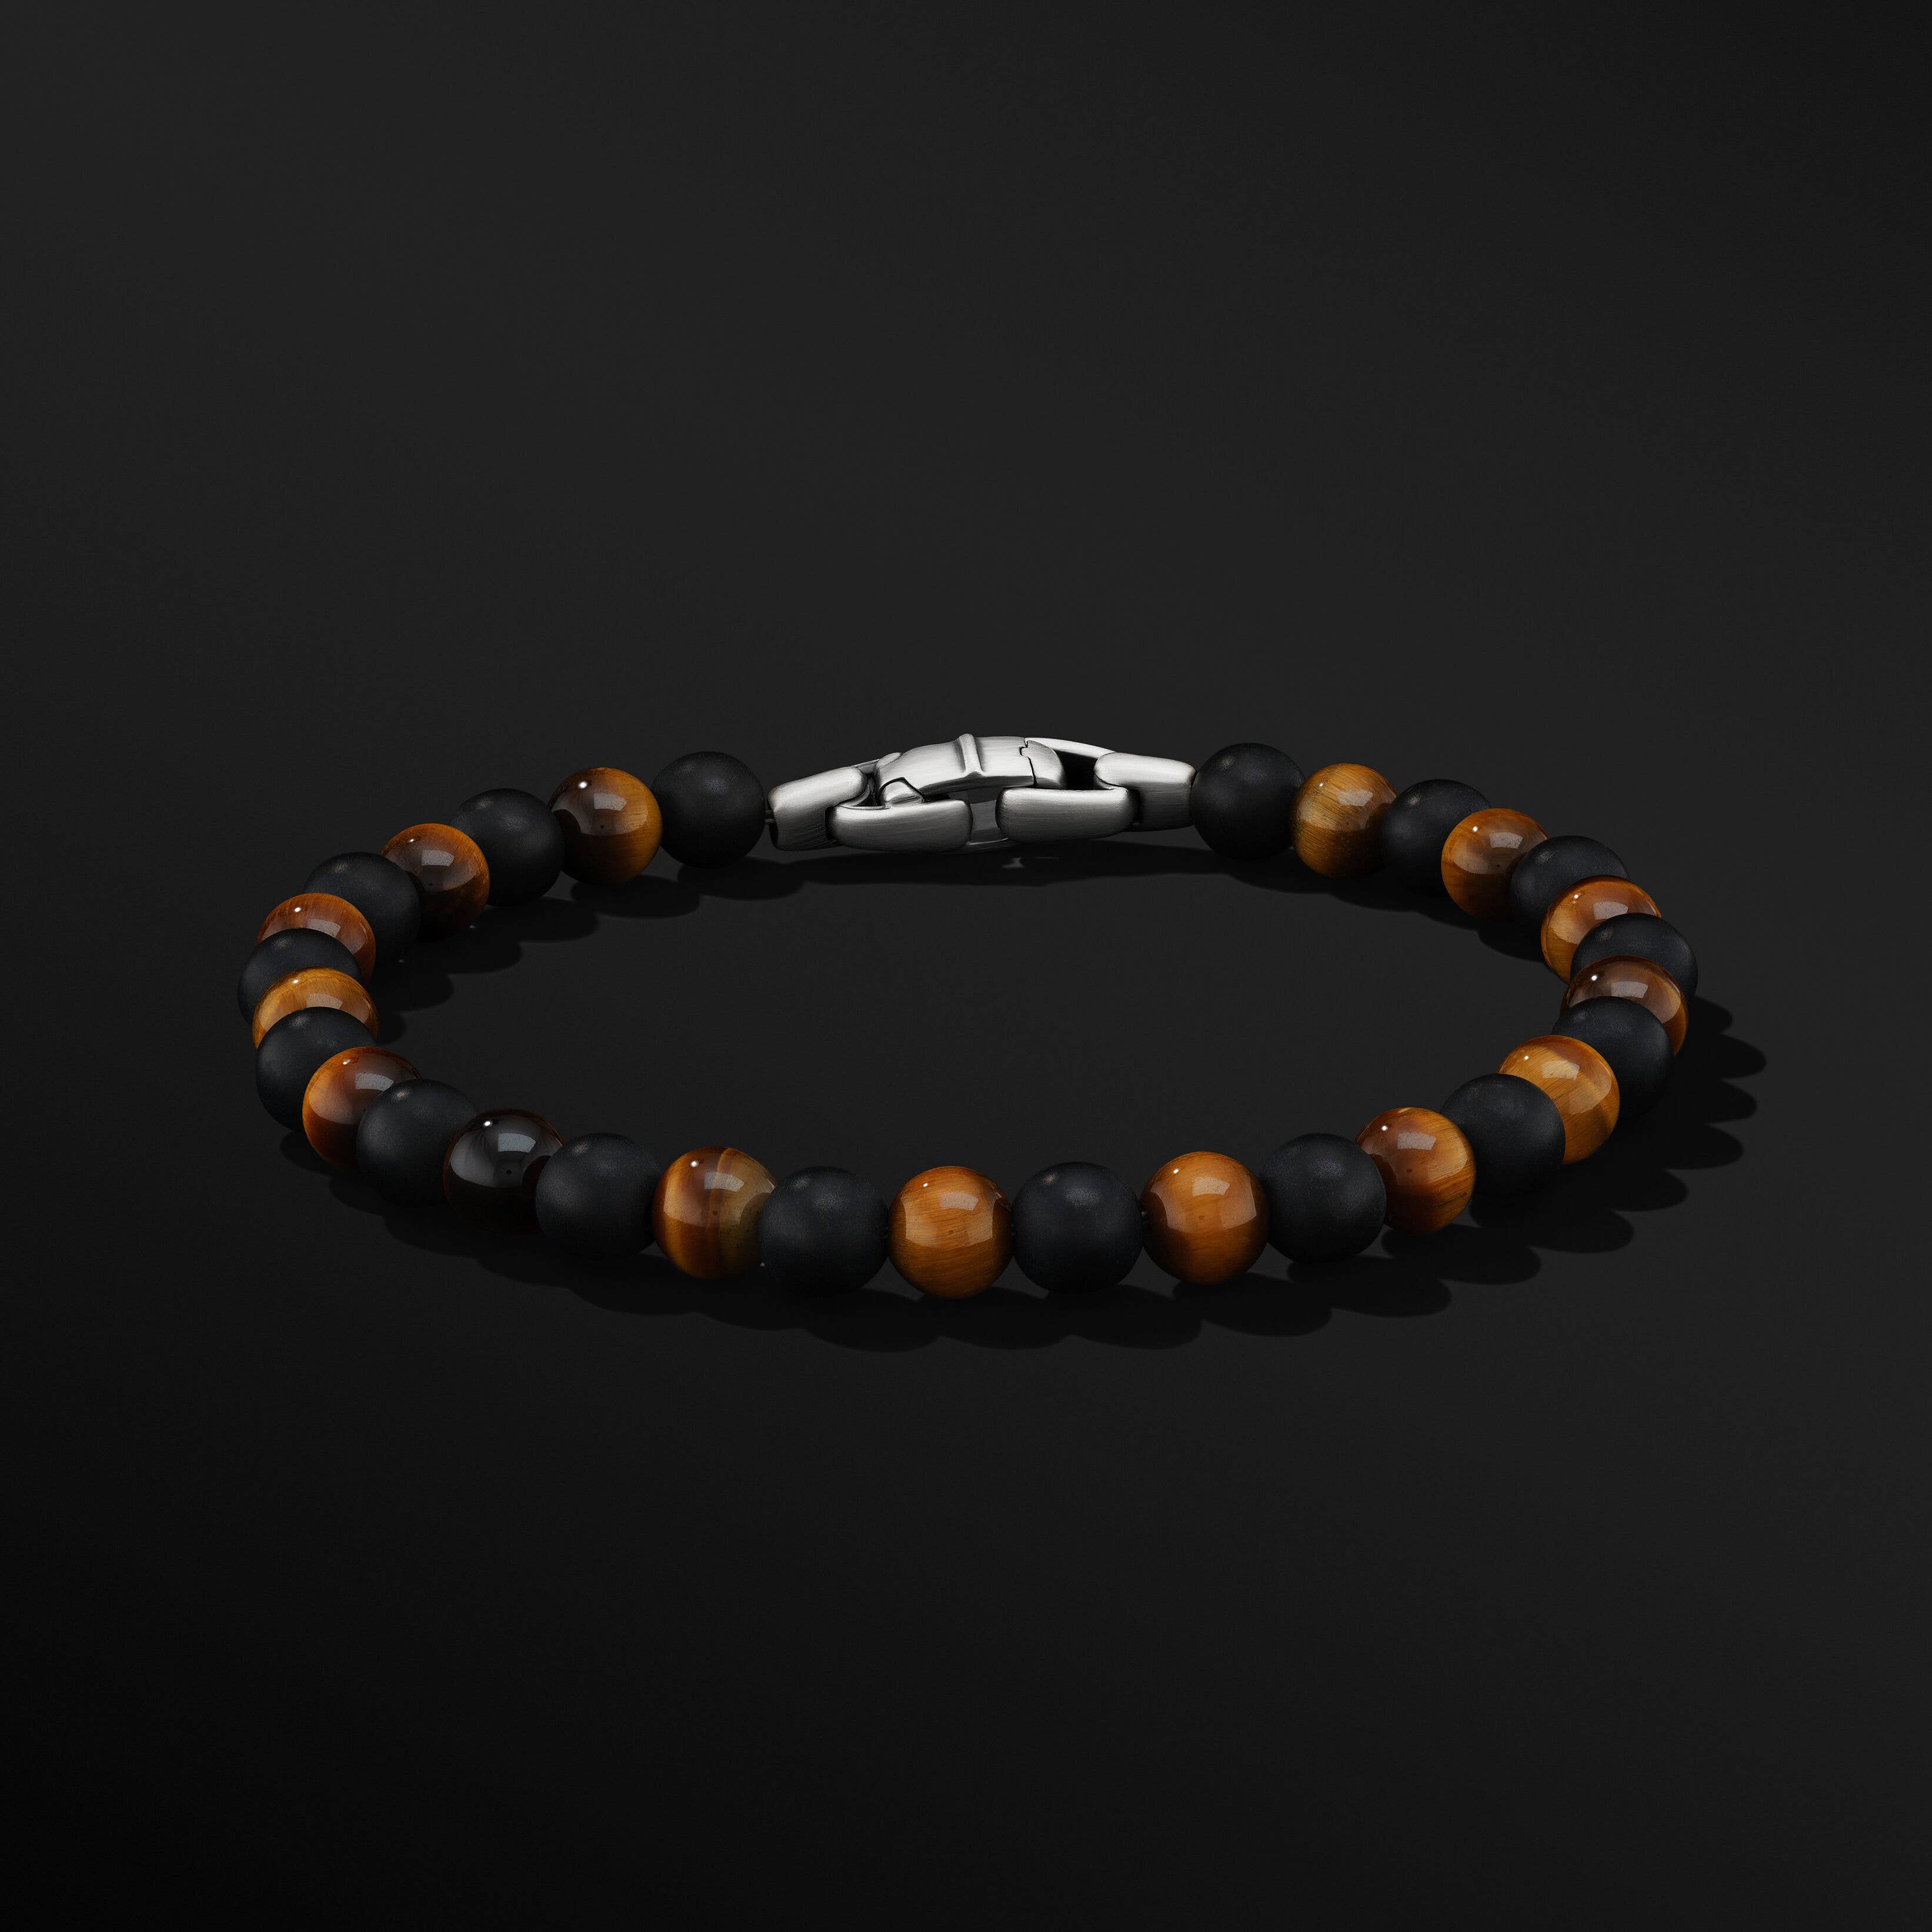 Spiritual Beads Alternating Bracelet with Black Onyx and Tiger's Eye